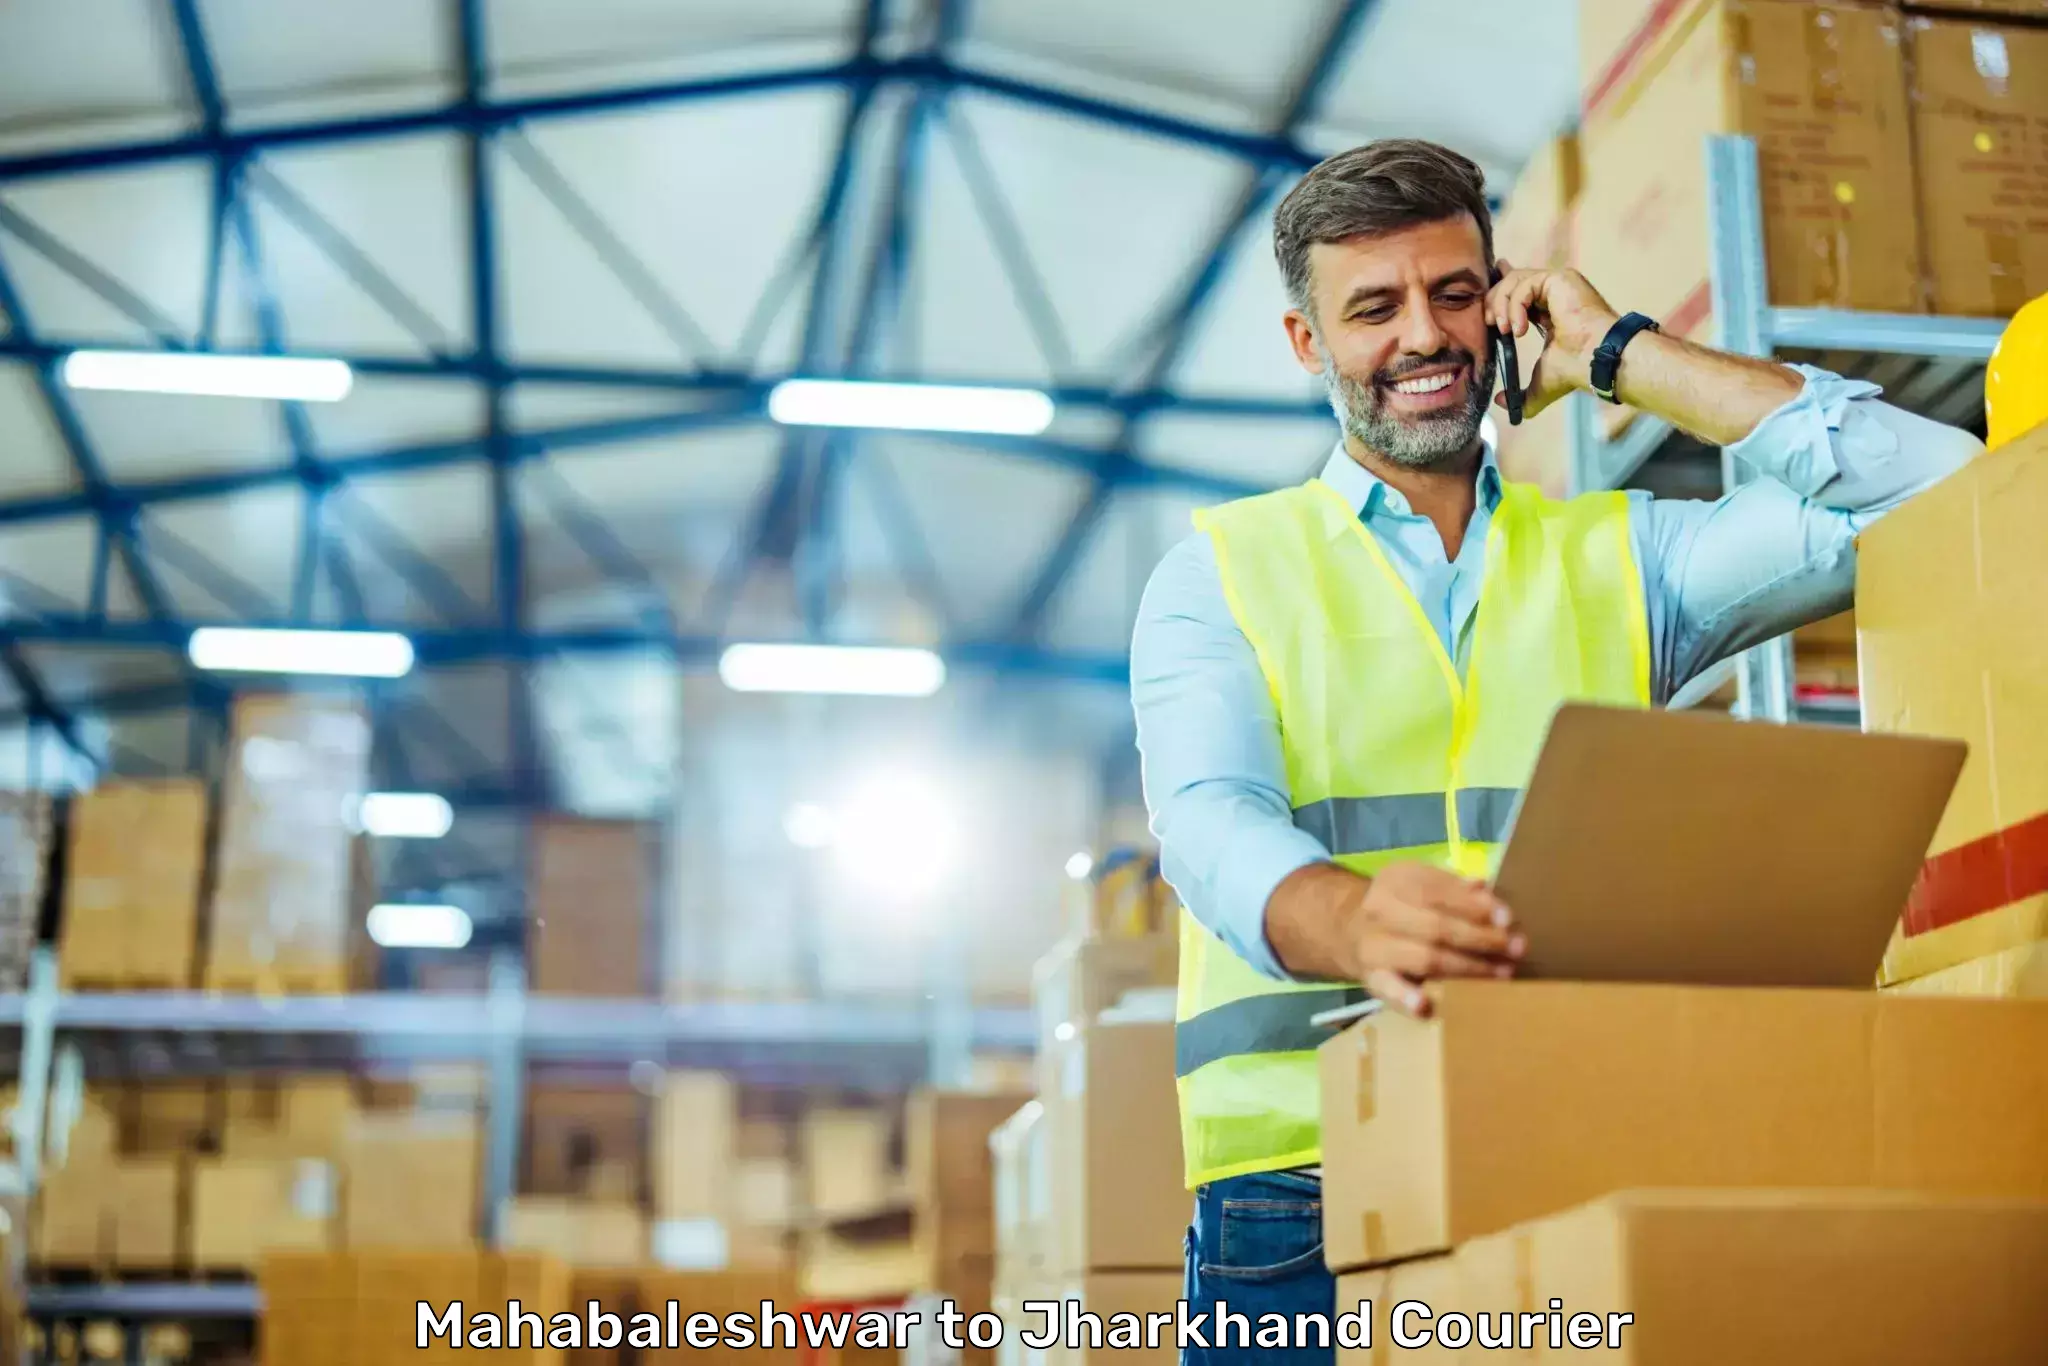 Express logistics providers Mahabaleshwar to Medininagar